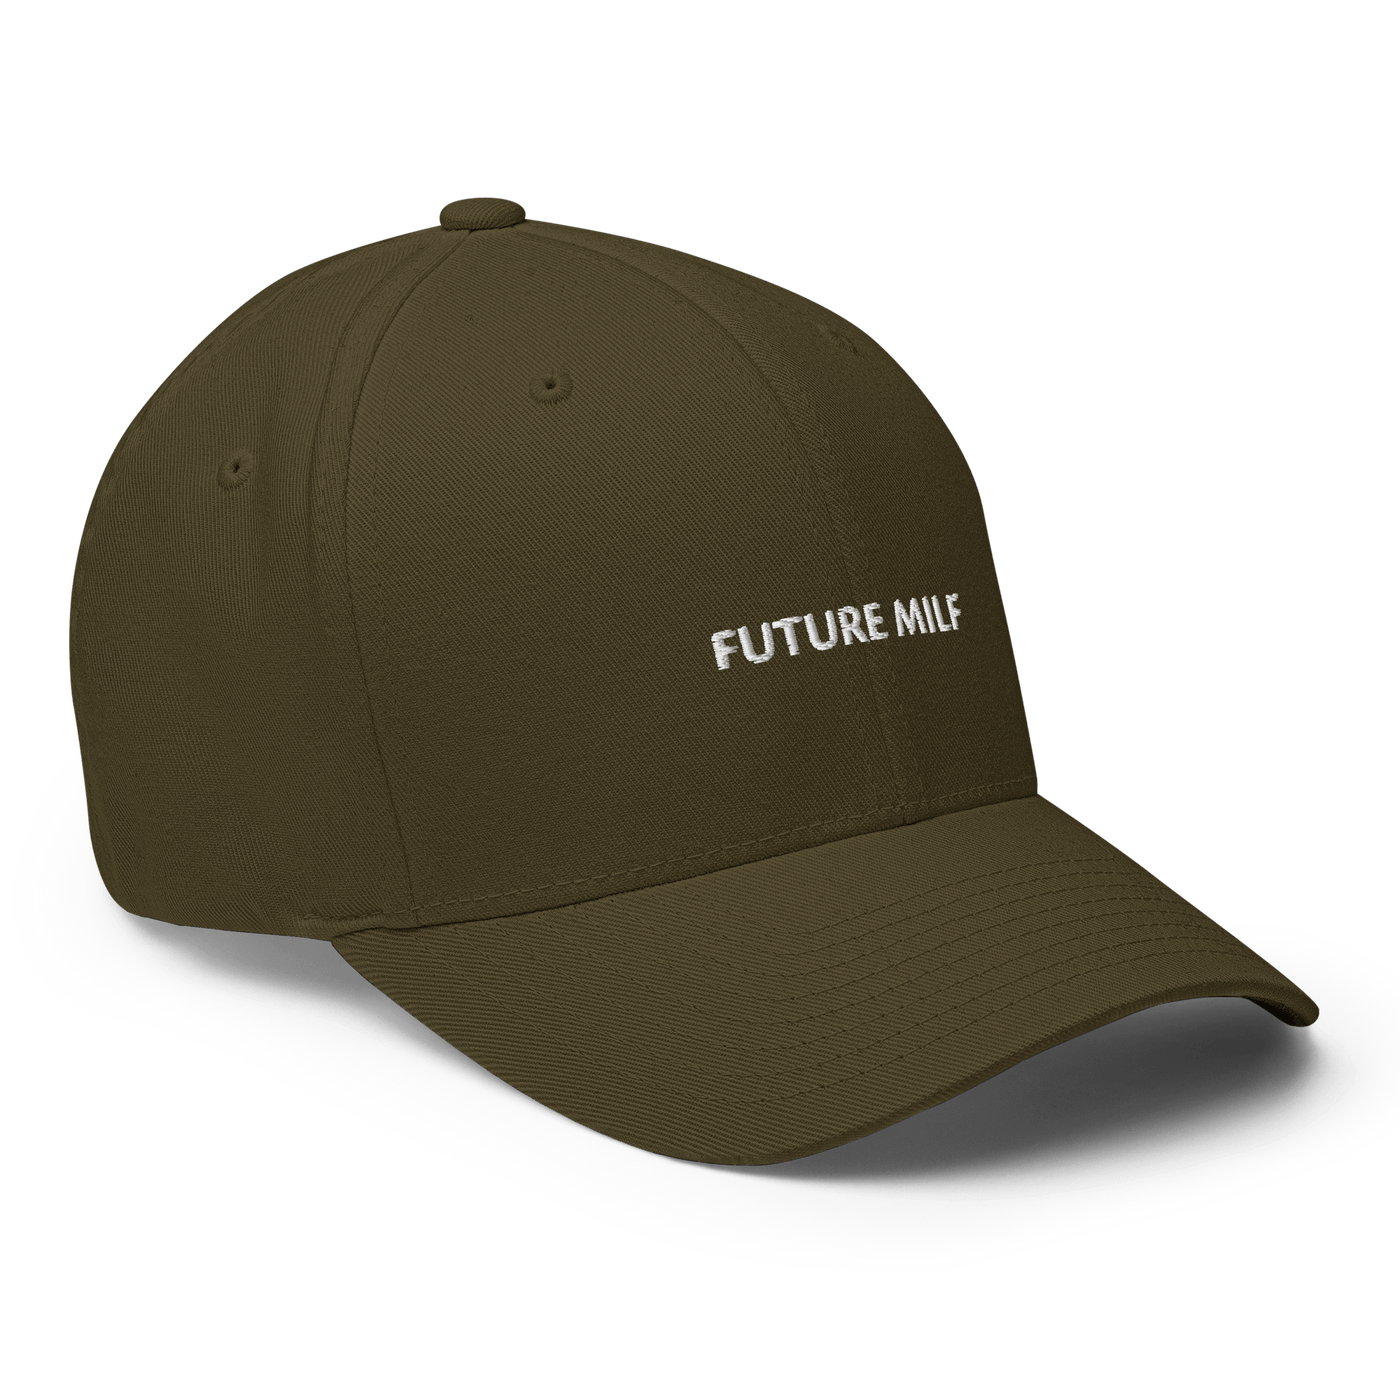 Future Milf Flexfit Cap - Olive - S/M - Just Another Cap Store